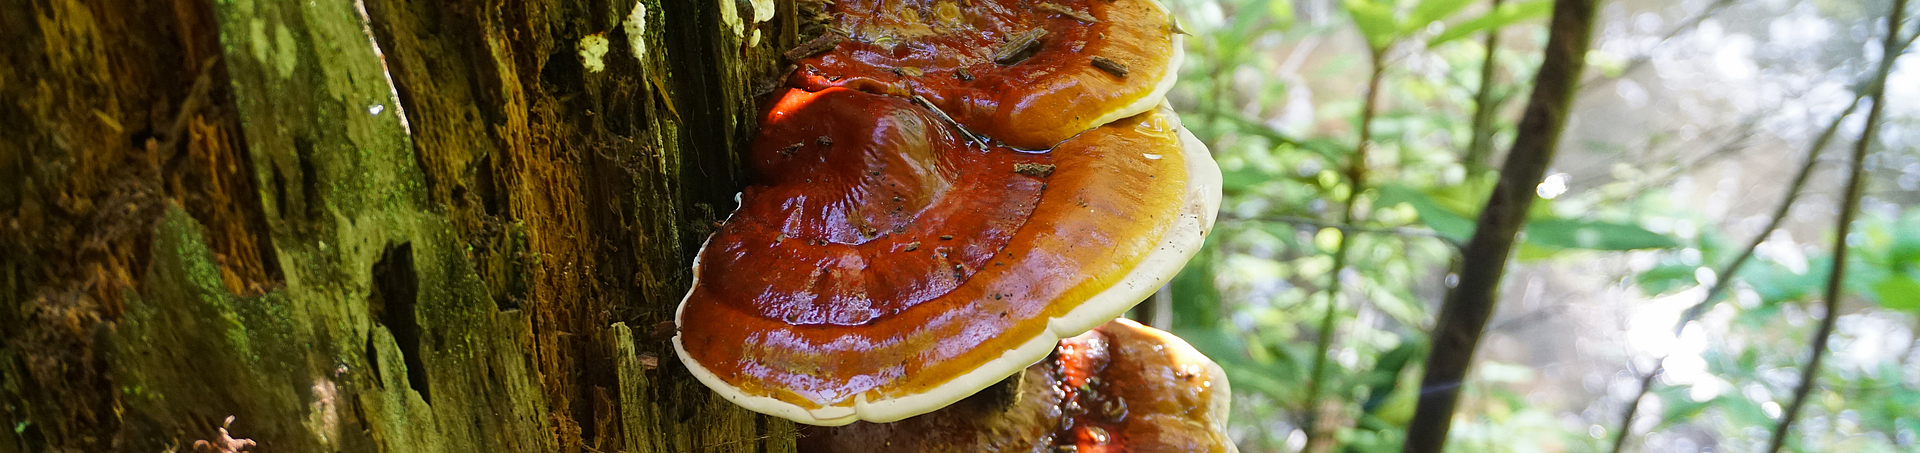 Reishi-Pilz (Ganoderma tsugae) wächst im Wald. 